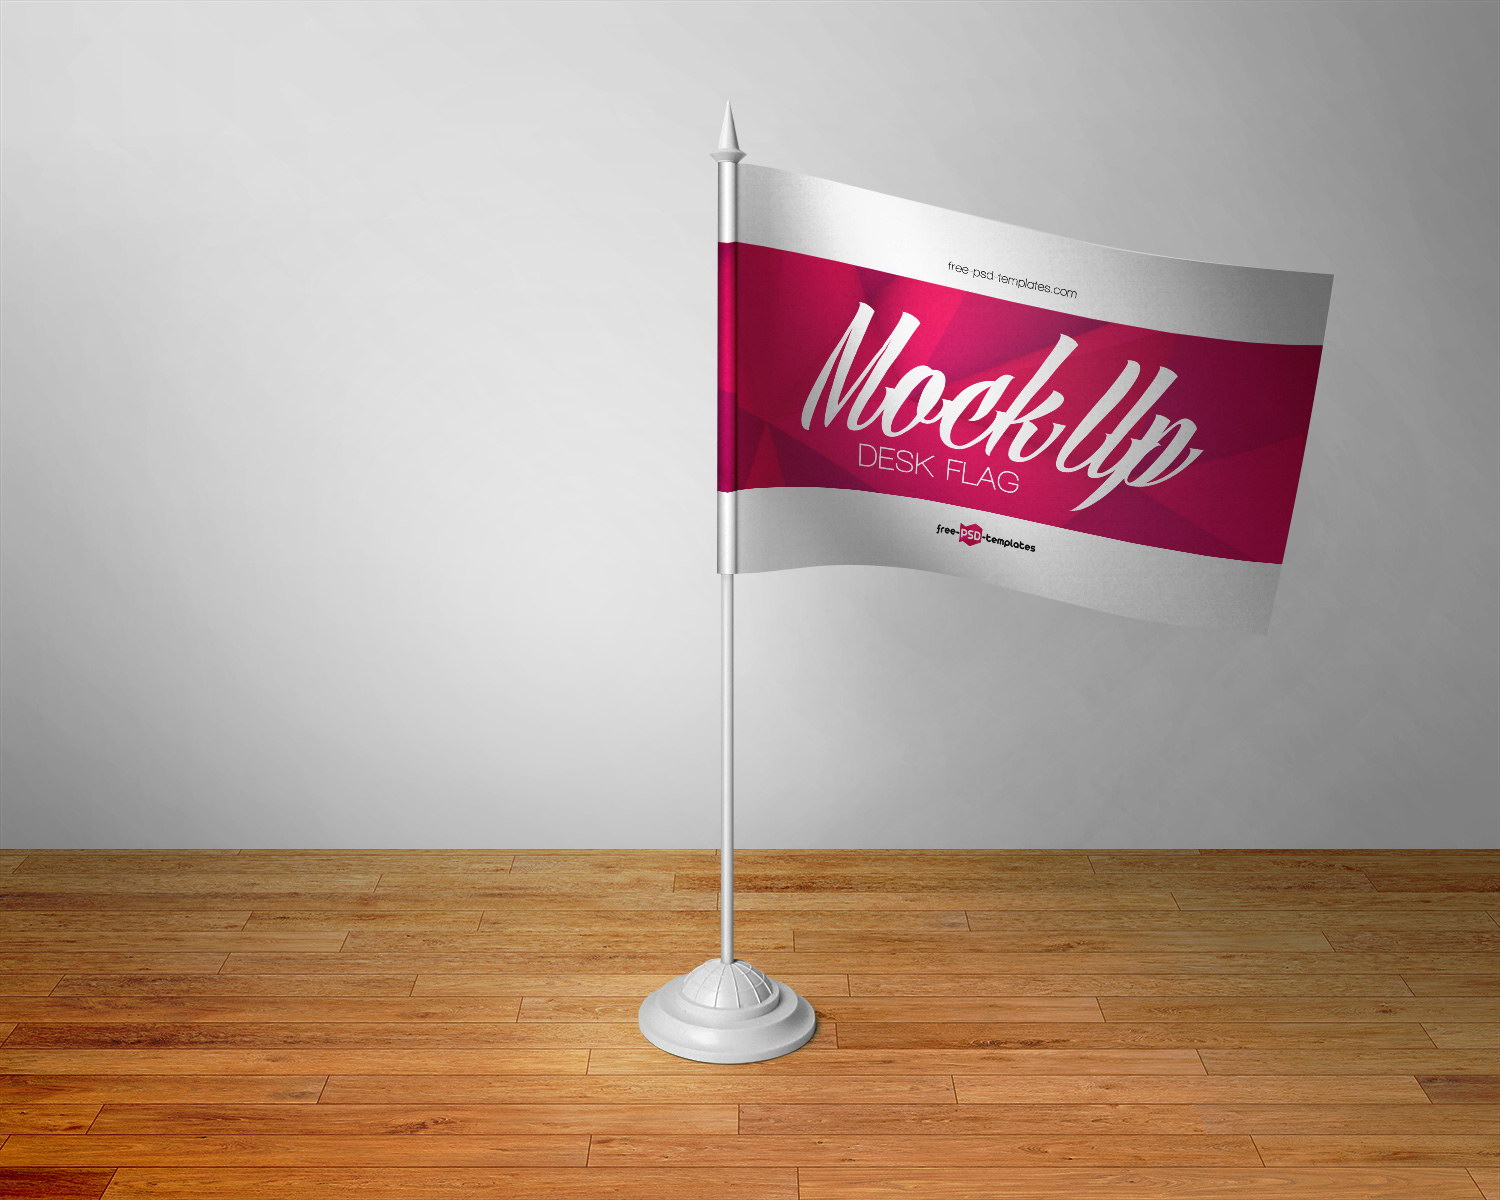 Download 3 Desk Flags Free Psd Mockups Free Mockup